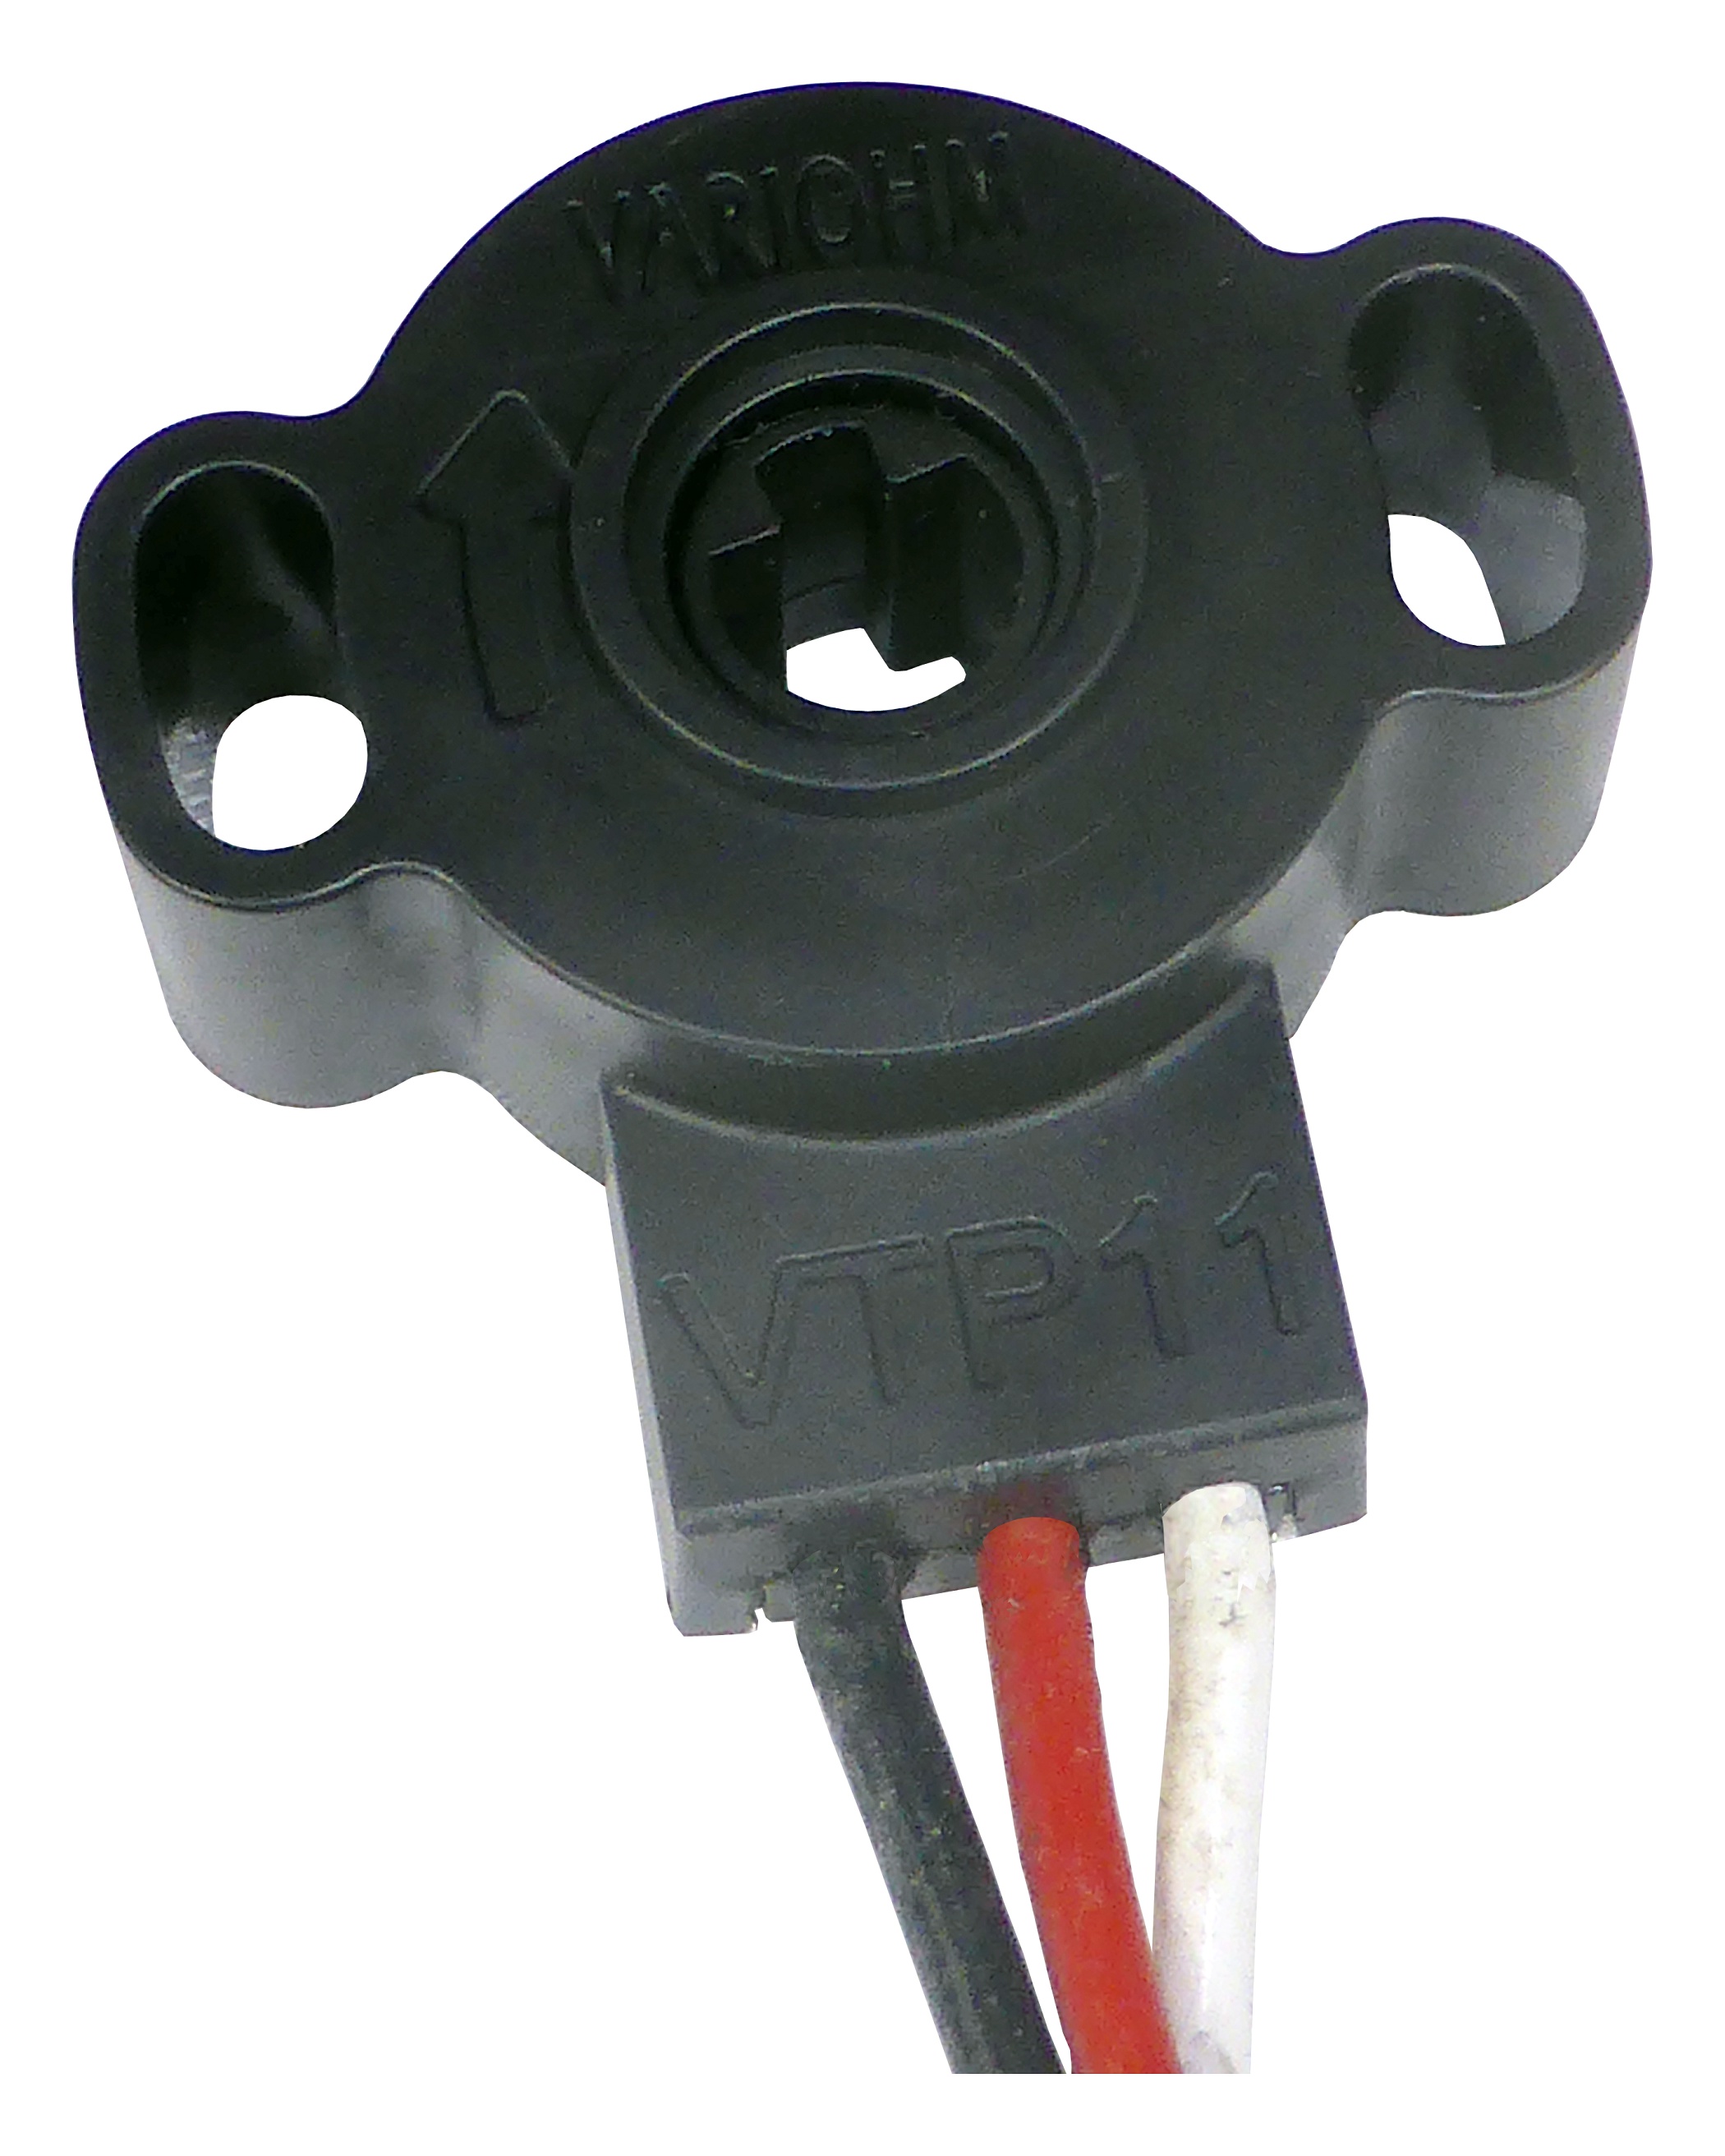 VTP11 rotary position sensor